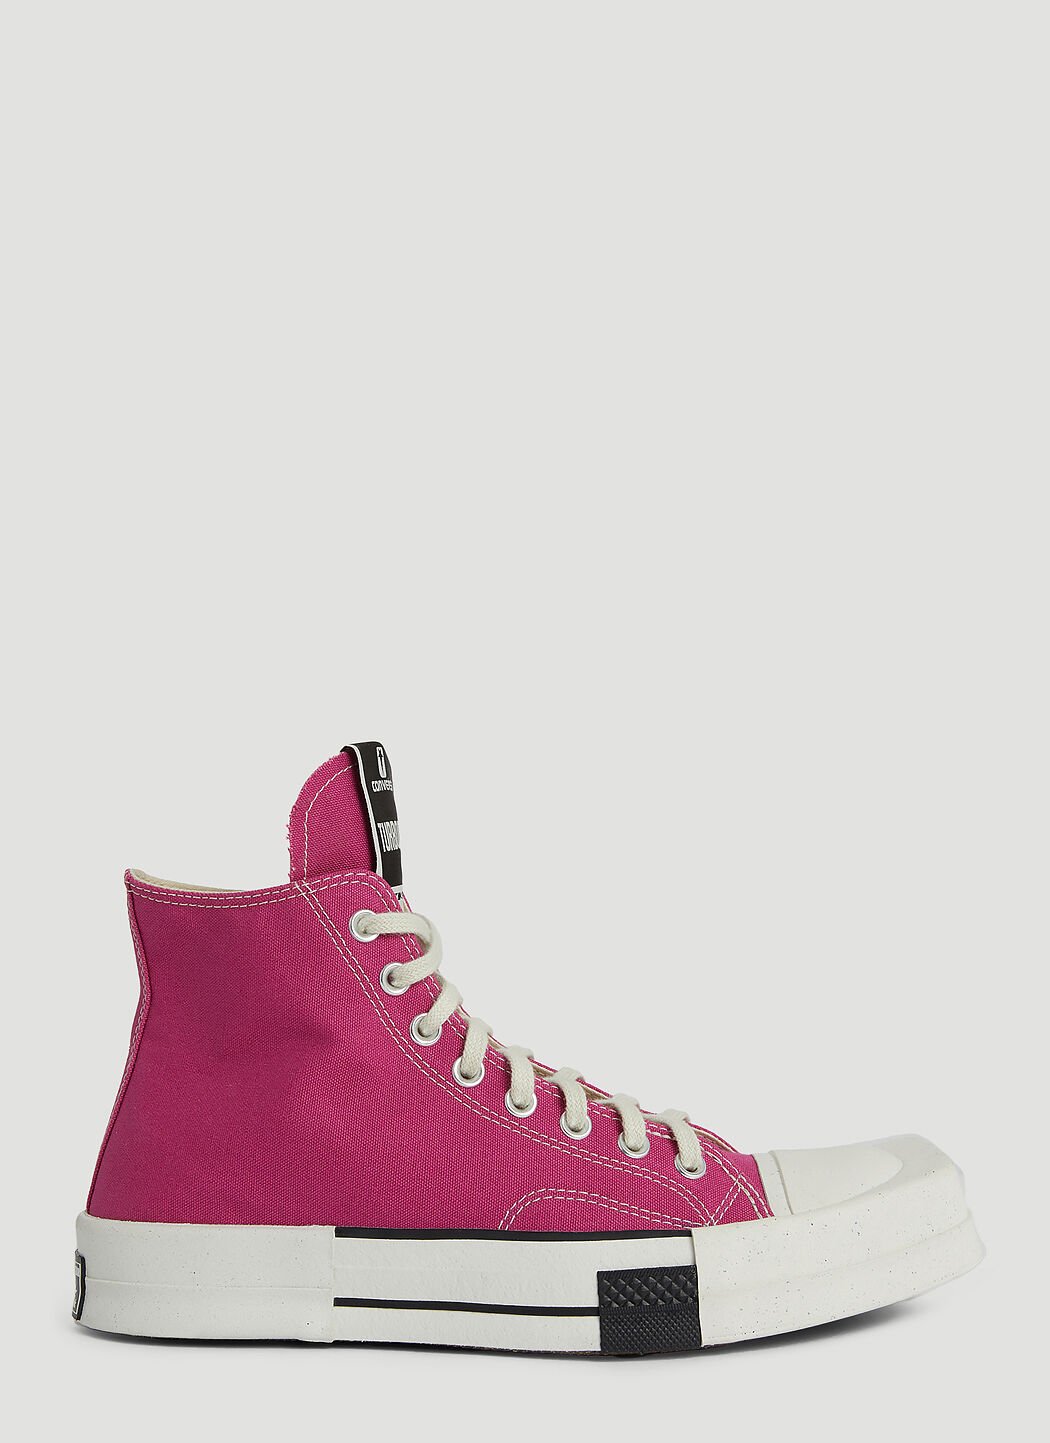 Rick Owens DRKSHDW x Converse Turbodrk High Top Sneakers Pink | LN-CC®